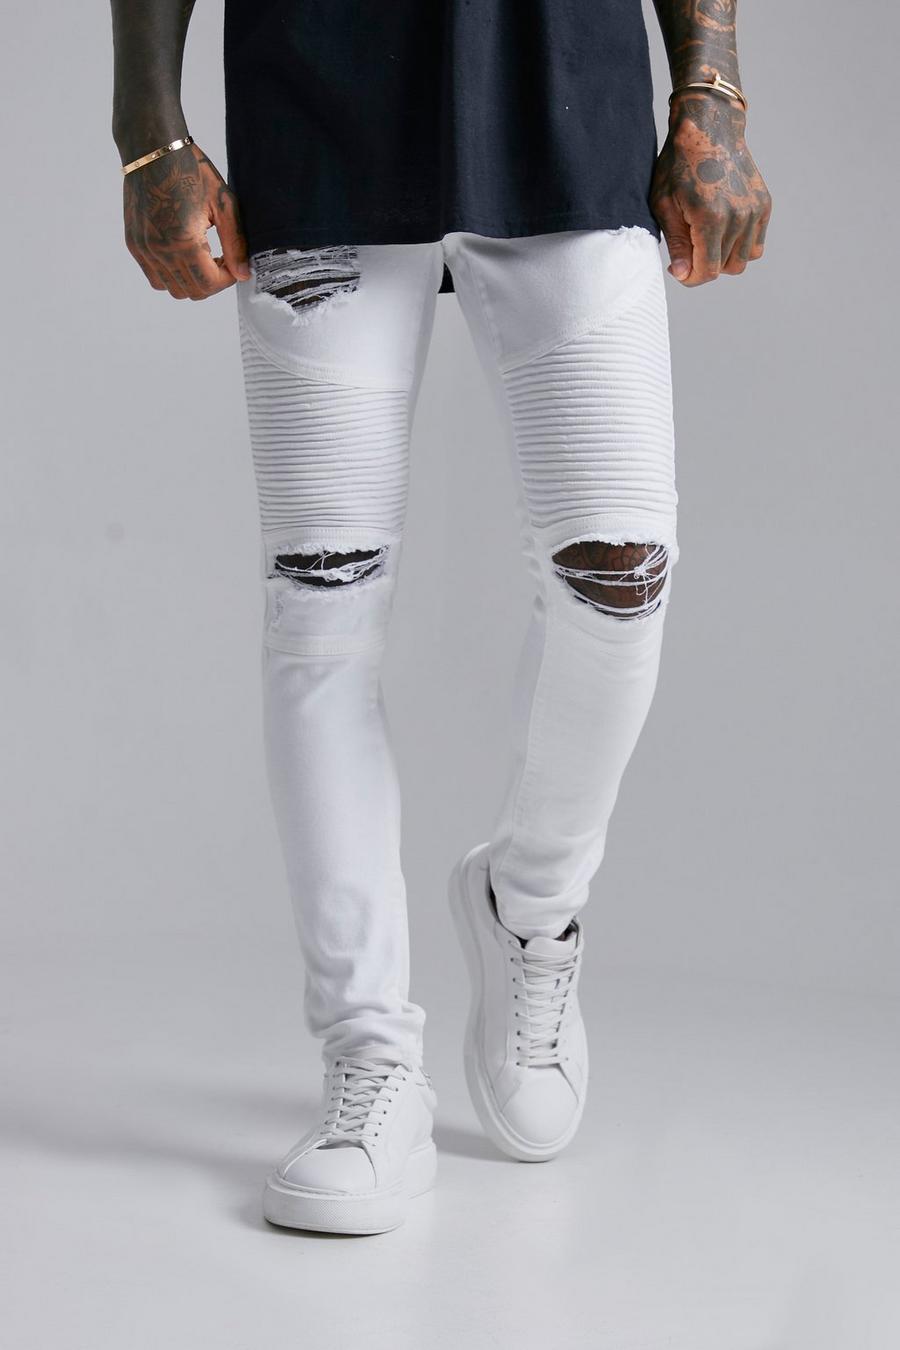 White Ripped Biker Jeans Mens Hot Sale | bellvalefarms.com